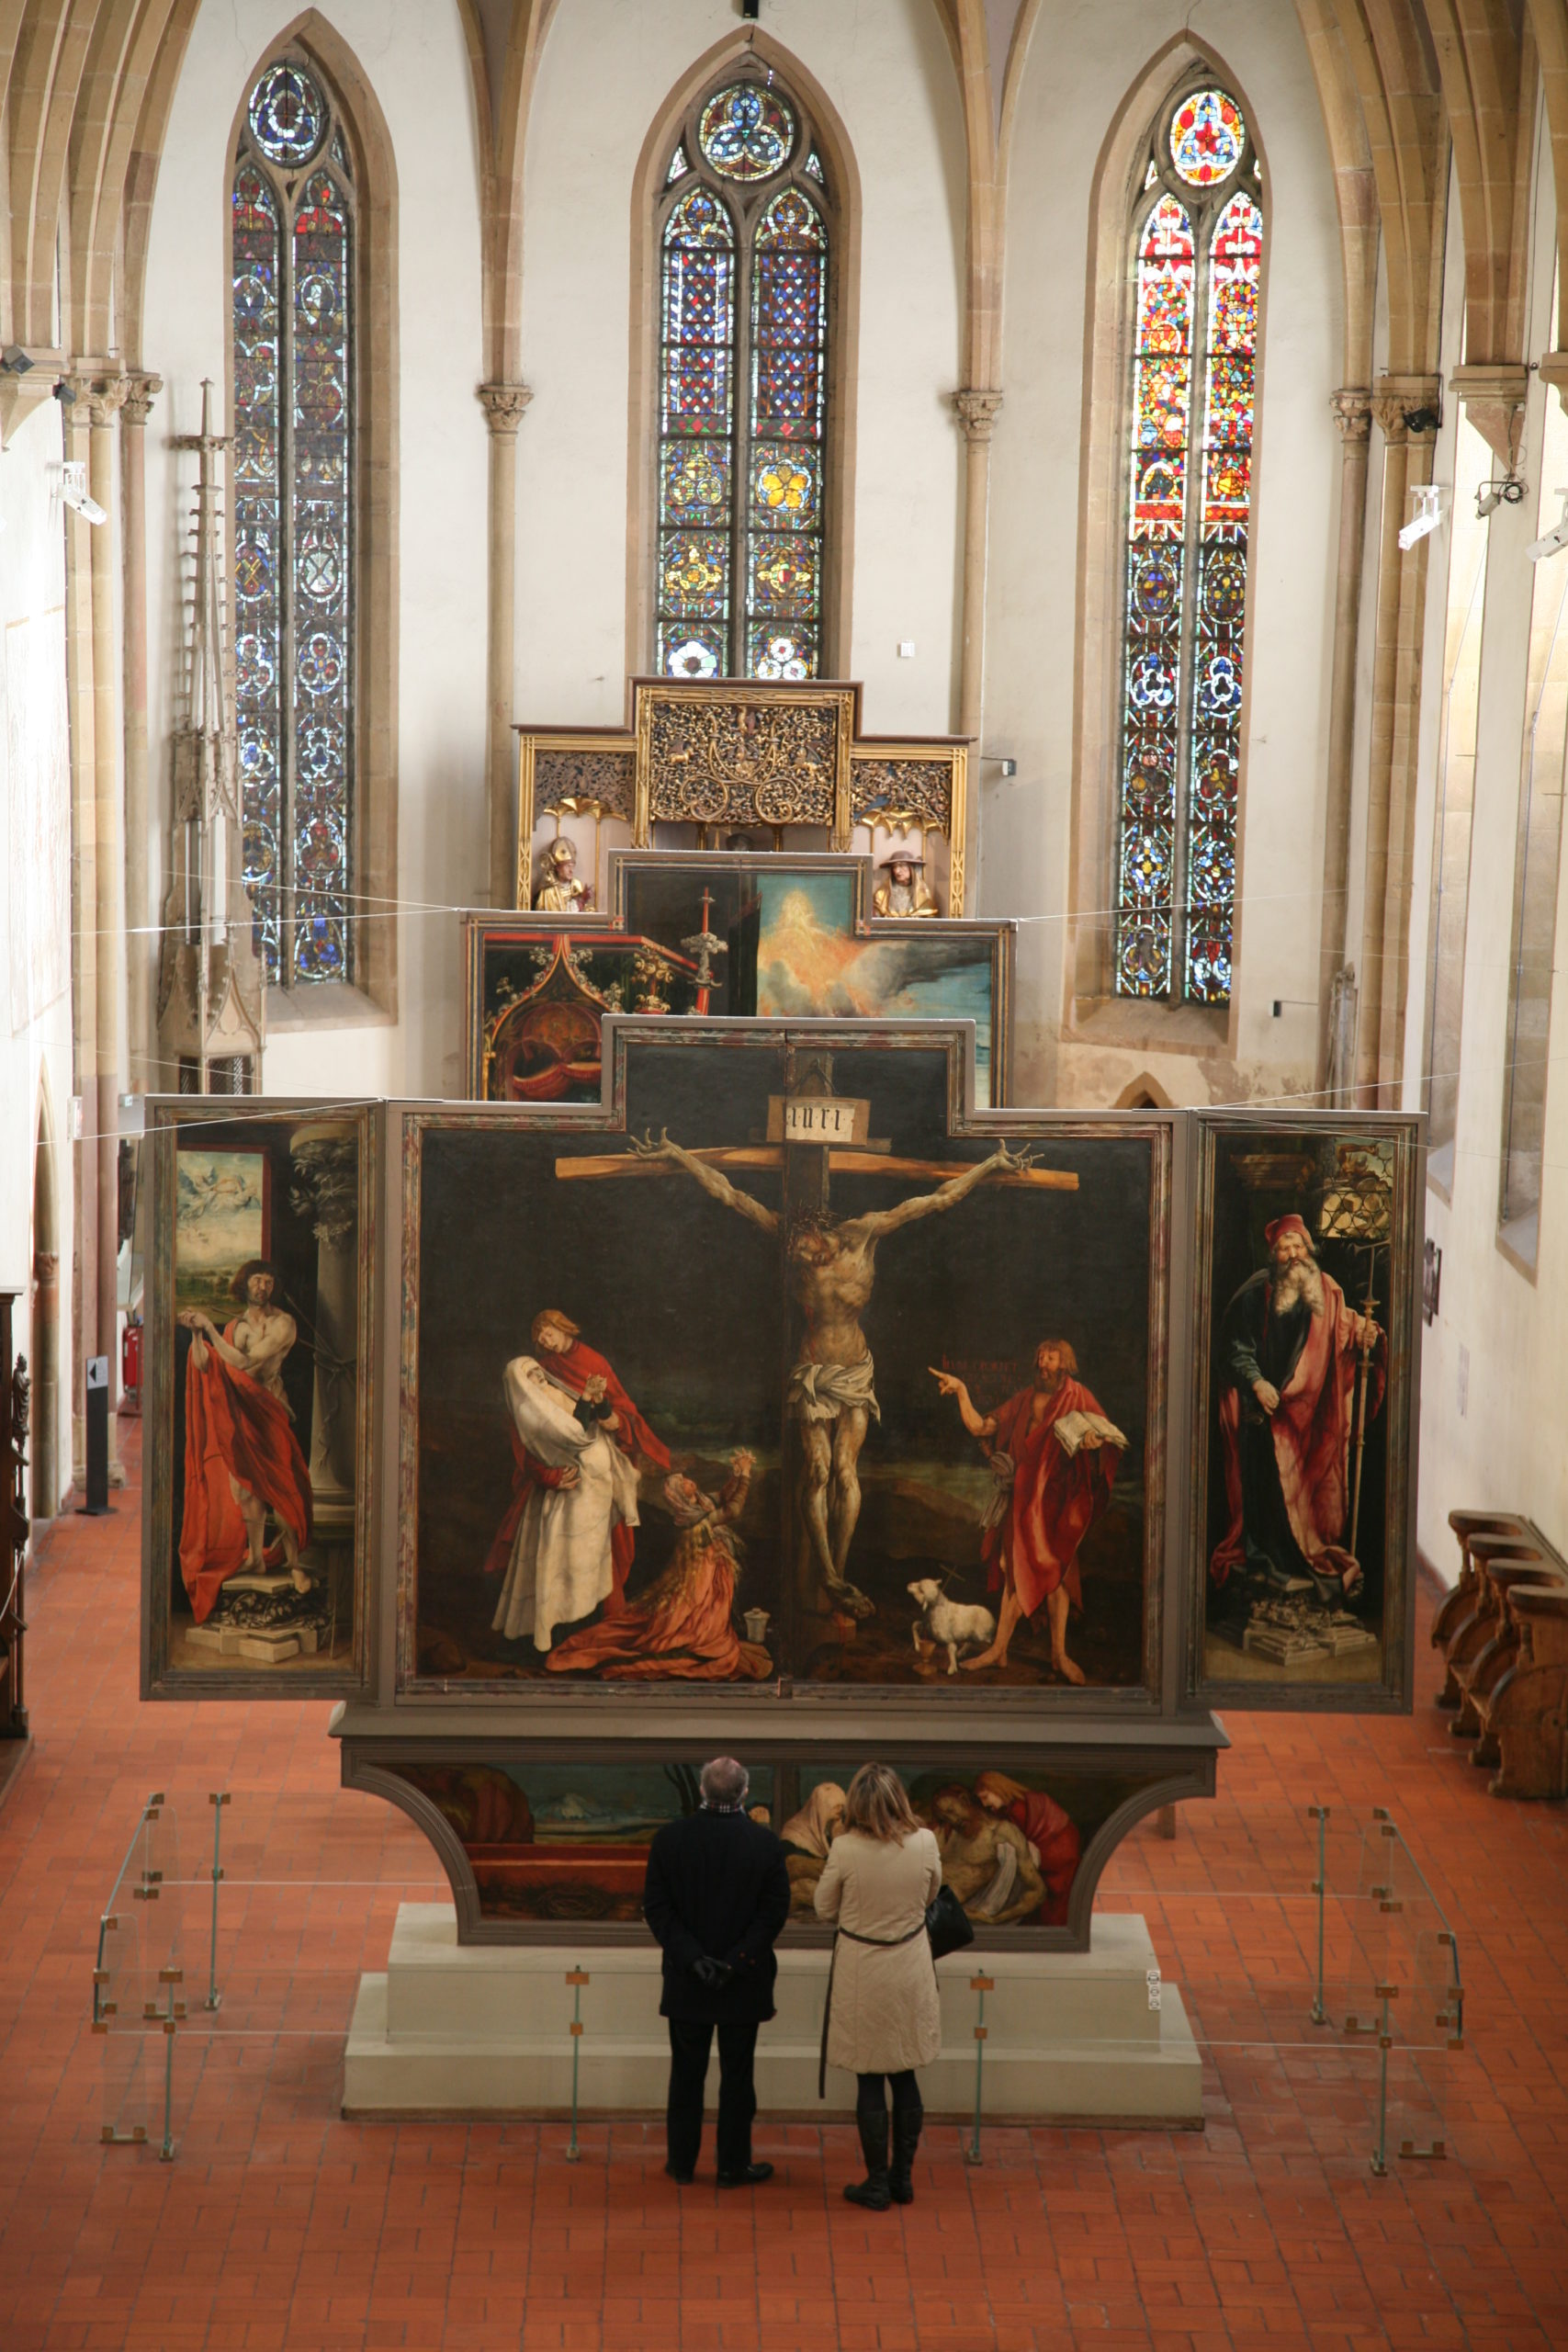 Matthias Grünewald, Isenheim Altarpiece, view in the chapel of the Hospital of Saint Anthony, Isenheim, c. 1510-15, oil on wood, 9' 9 1/2" x 10' 9" (center panel) (Unterlinden Museum, Colmar, France) 